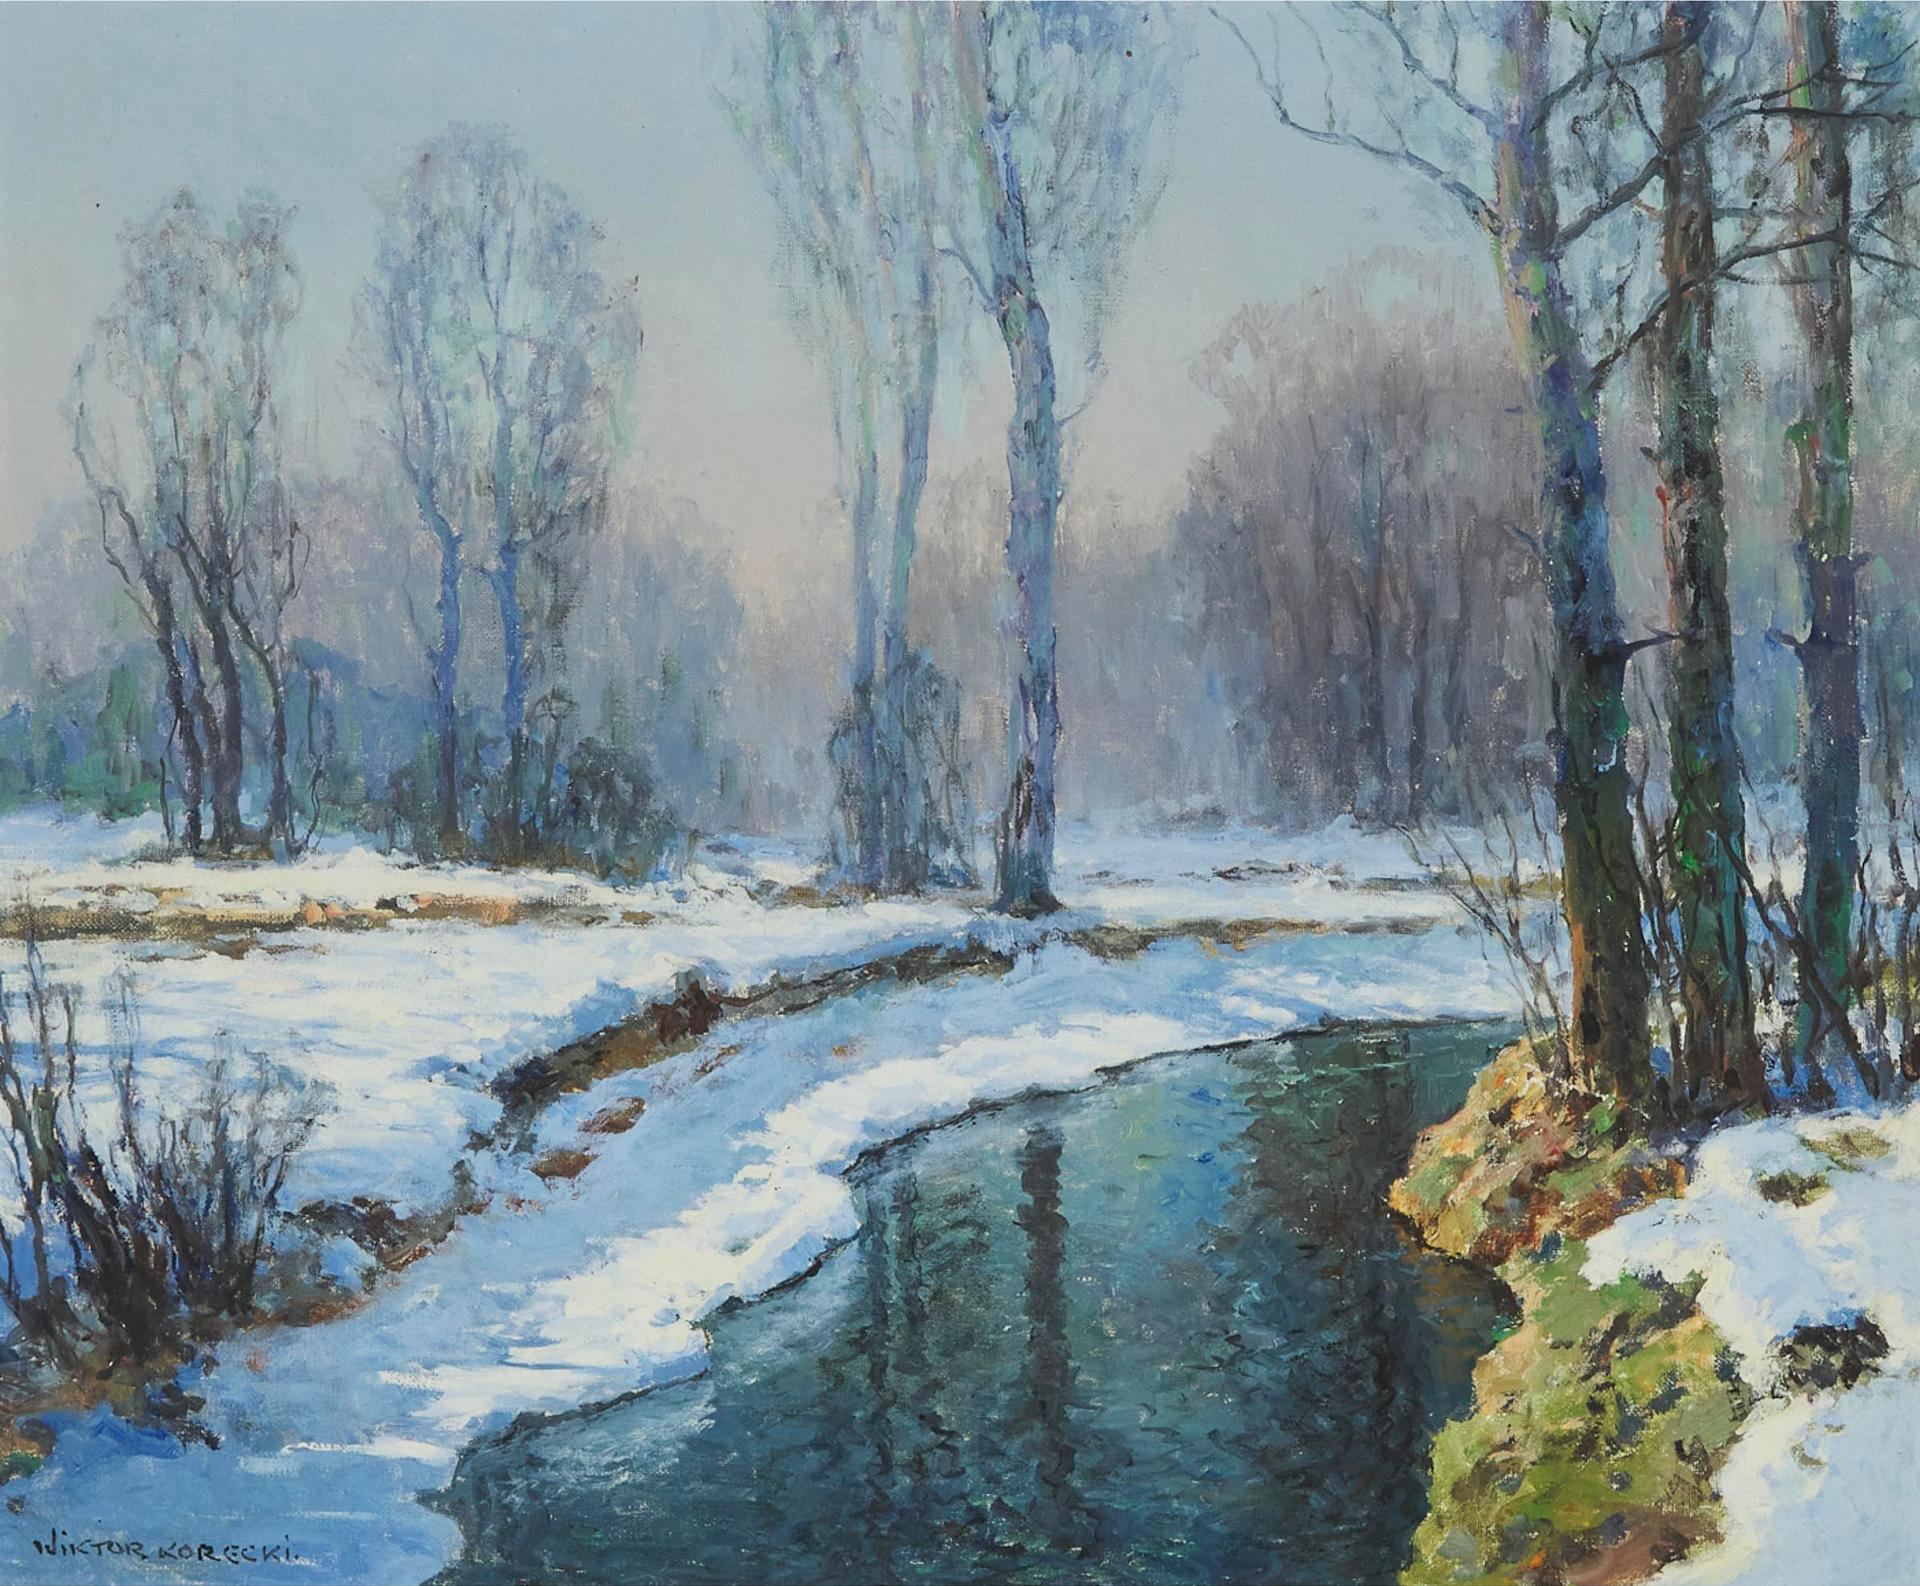 Wiktor Korecki (1890-1980) - Winding River In Snow